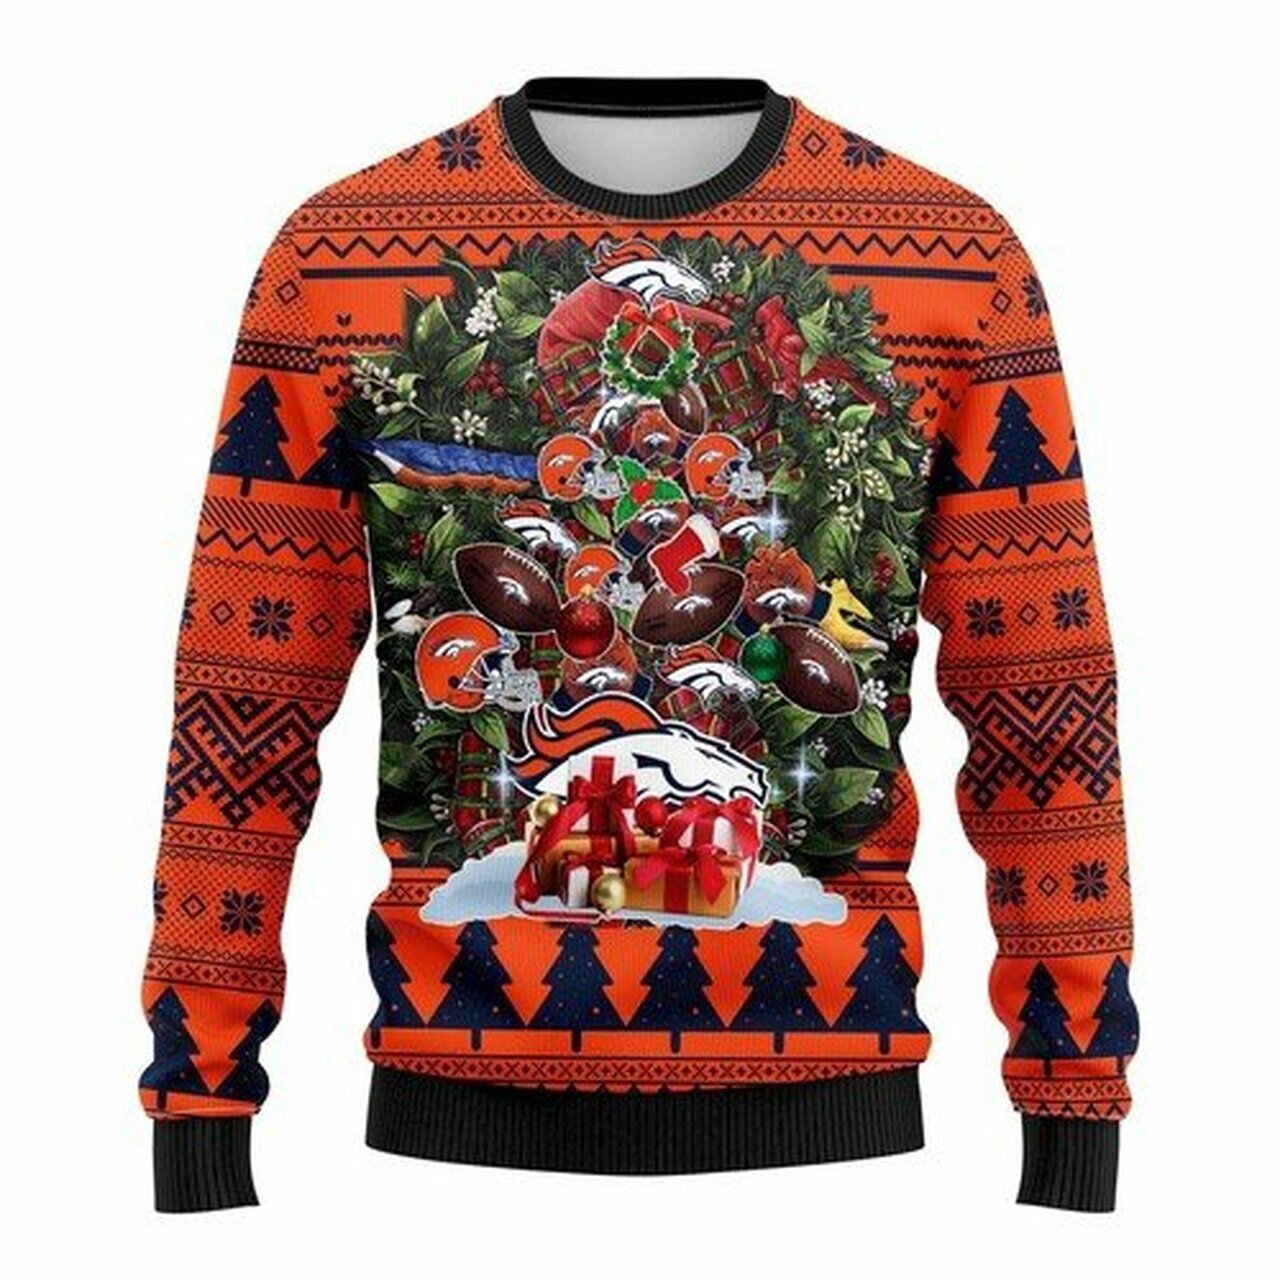 [ COOL ] NFL Denver Brocos christmas tree ugly sweater – Saleoff 311221